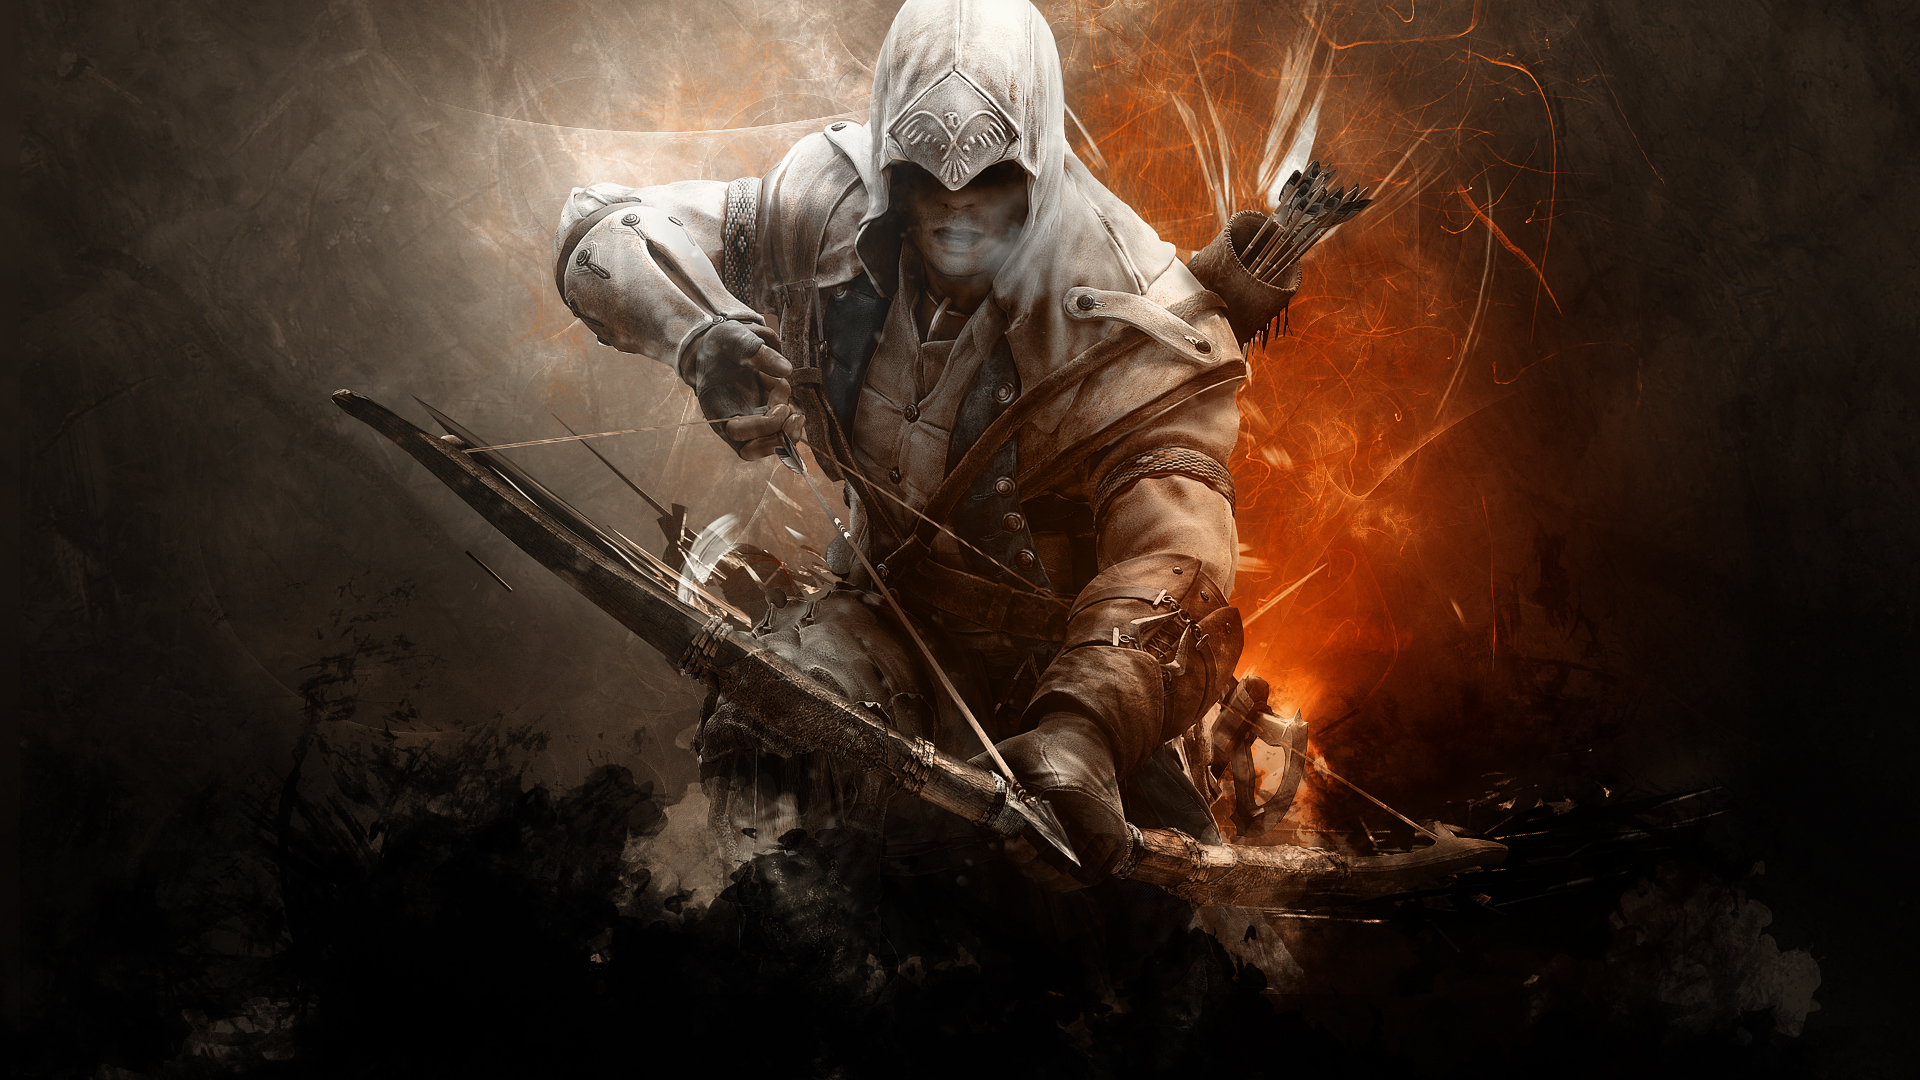 46+] Assassins Creed 3 Wallpaper Hd - WallpaperSafari